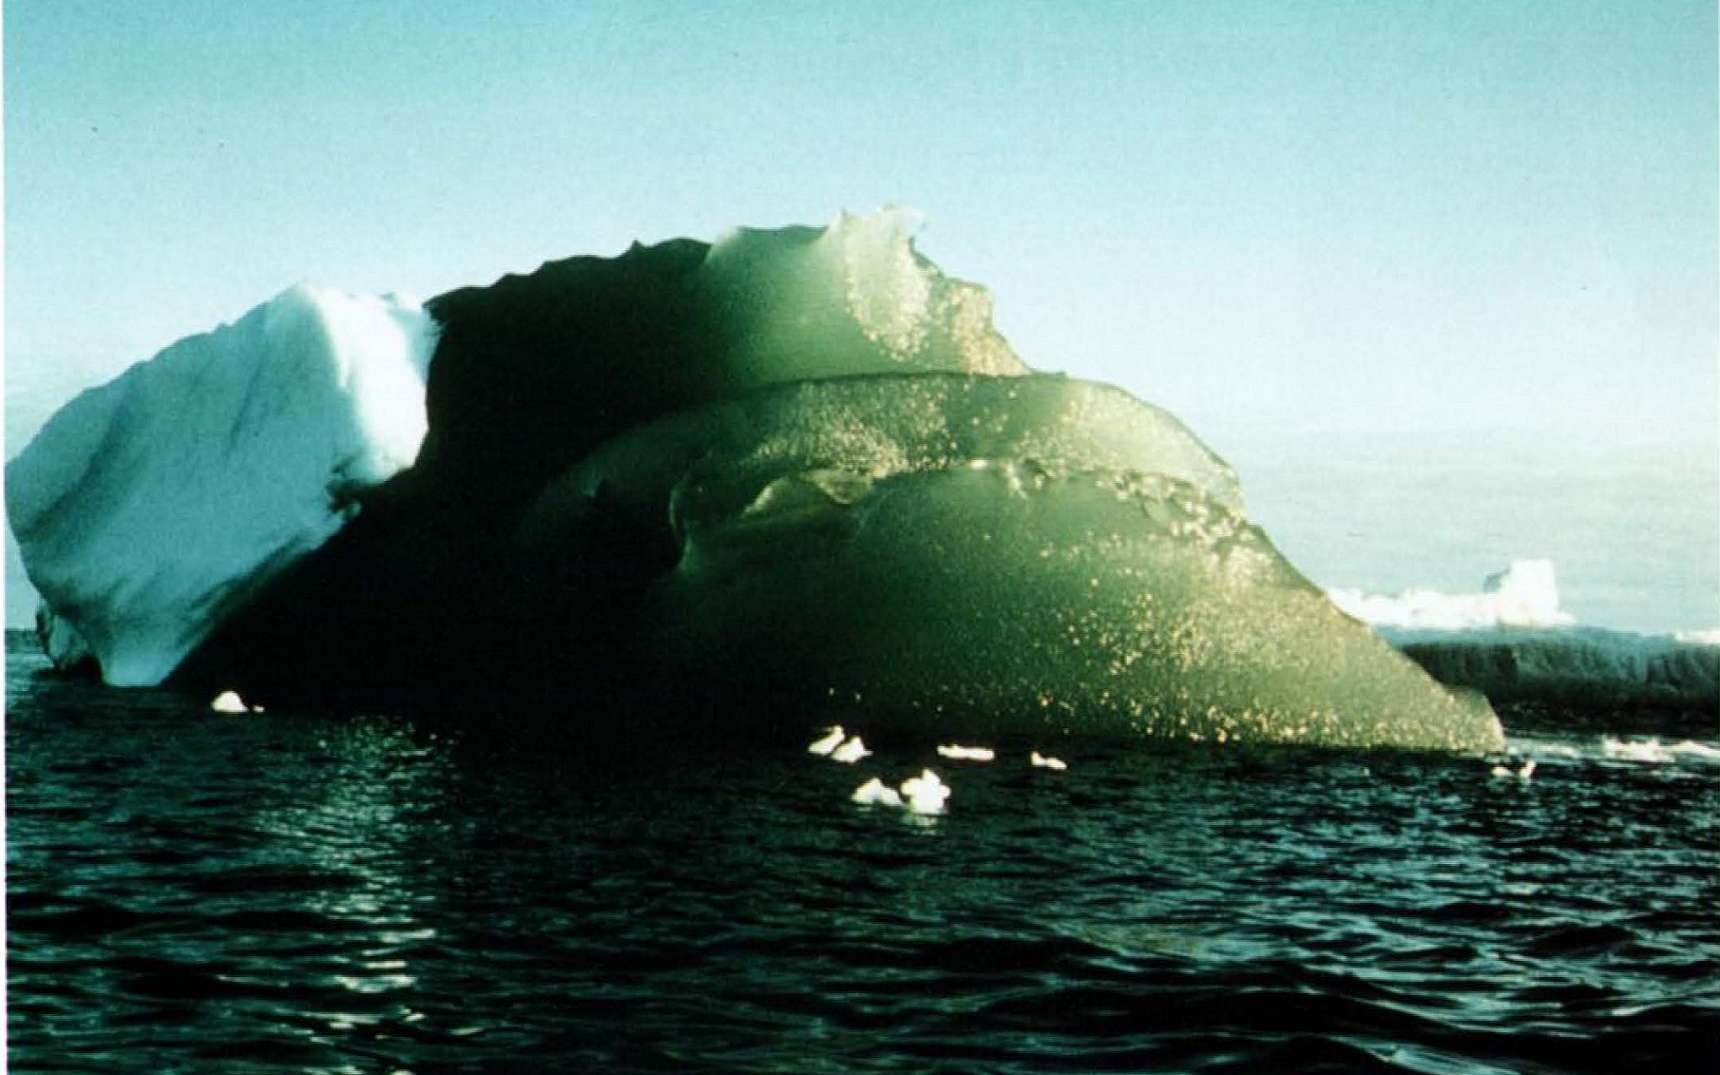 le mystere des icebergs verts en antarctique enfin resolu